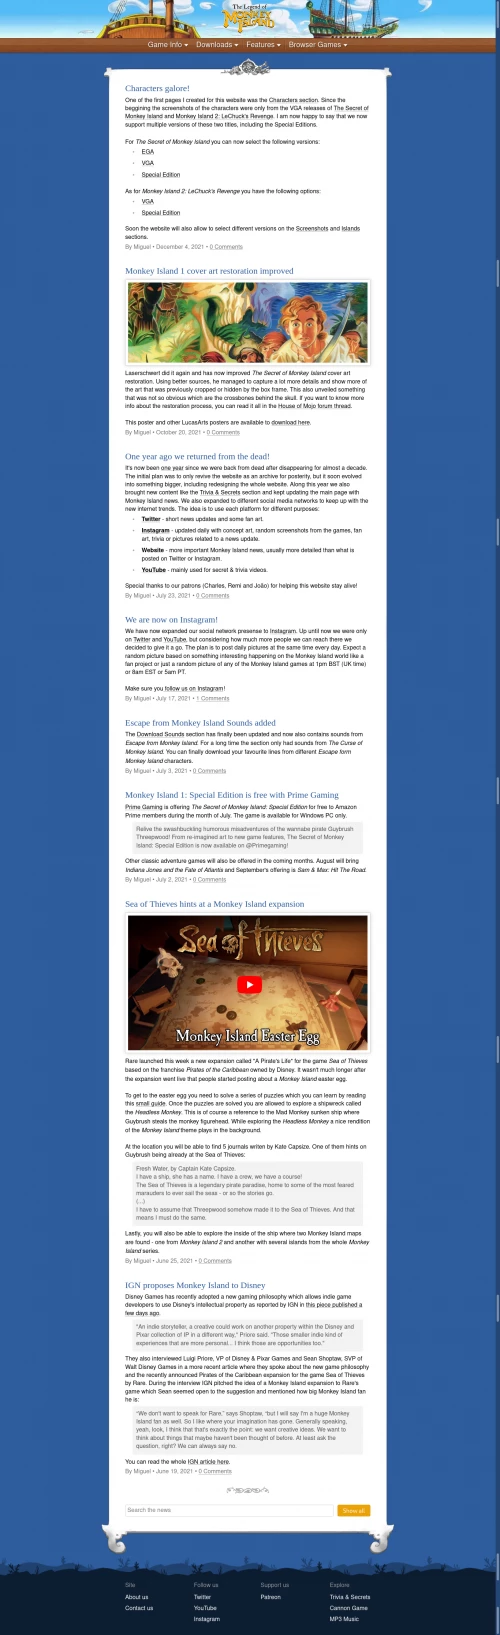 Screenshot of the website The Legend of Monkey Island